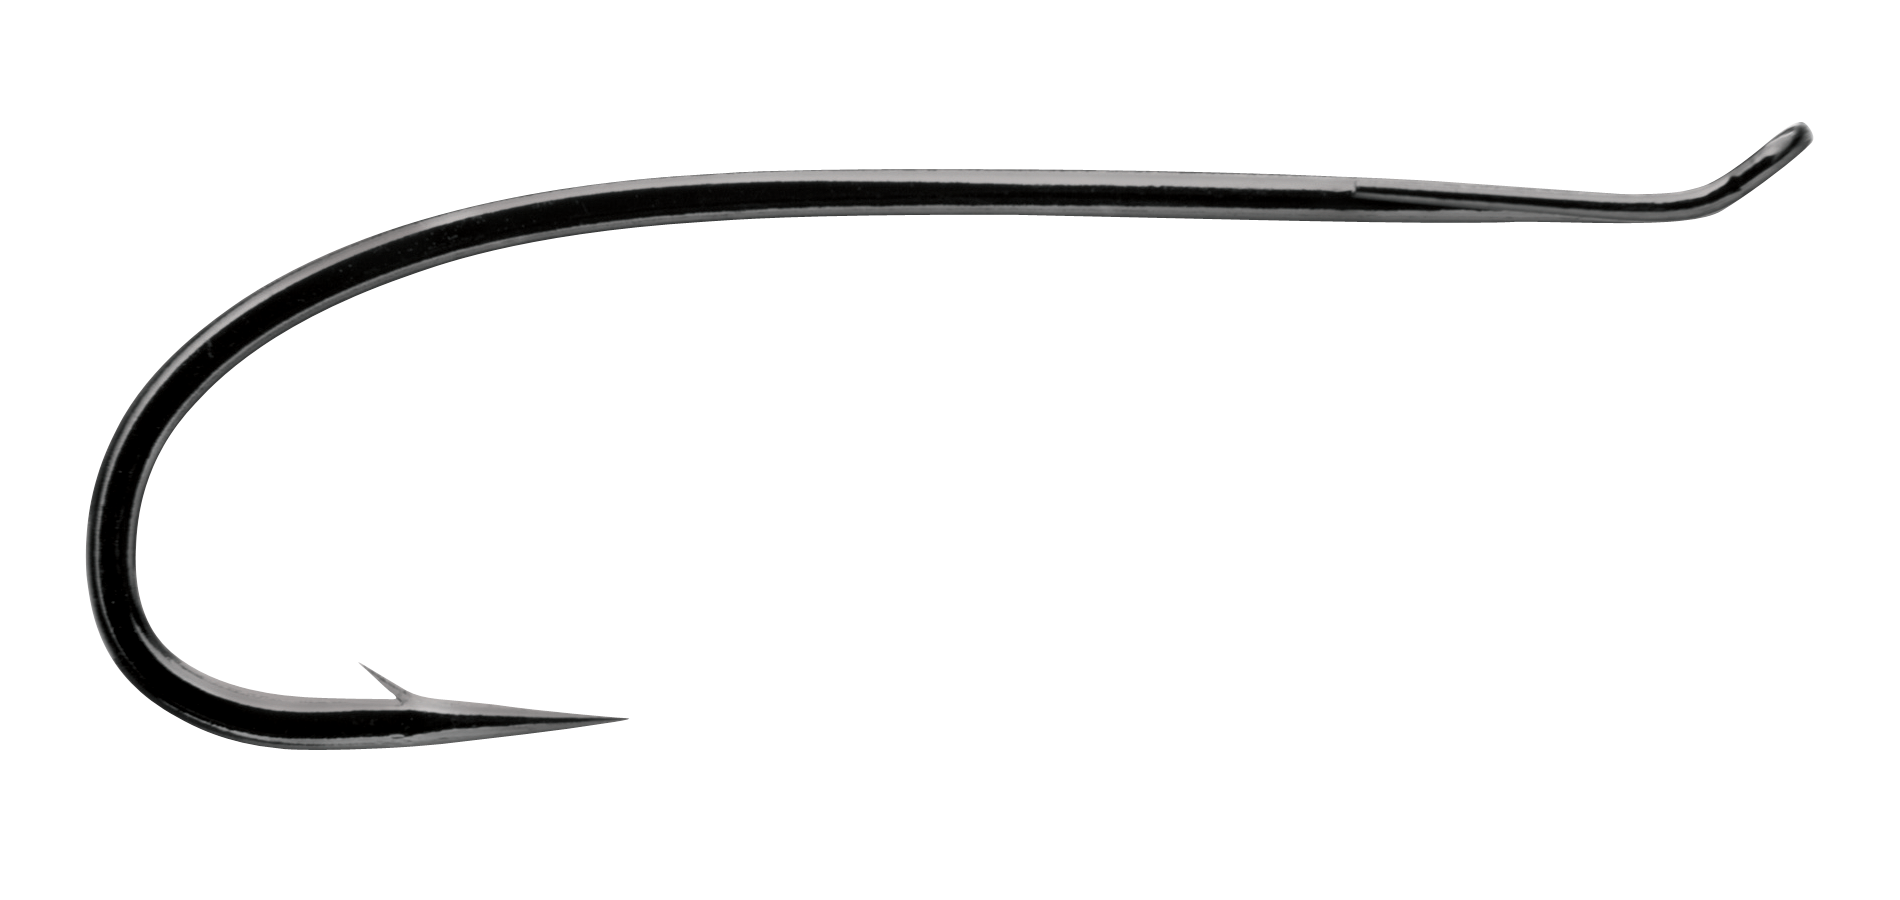 Gamakatsu Salmon/Steelhead Wet Fly Hook  T10-6H -#8 - Nickel Silver Black